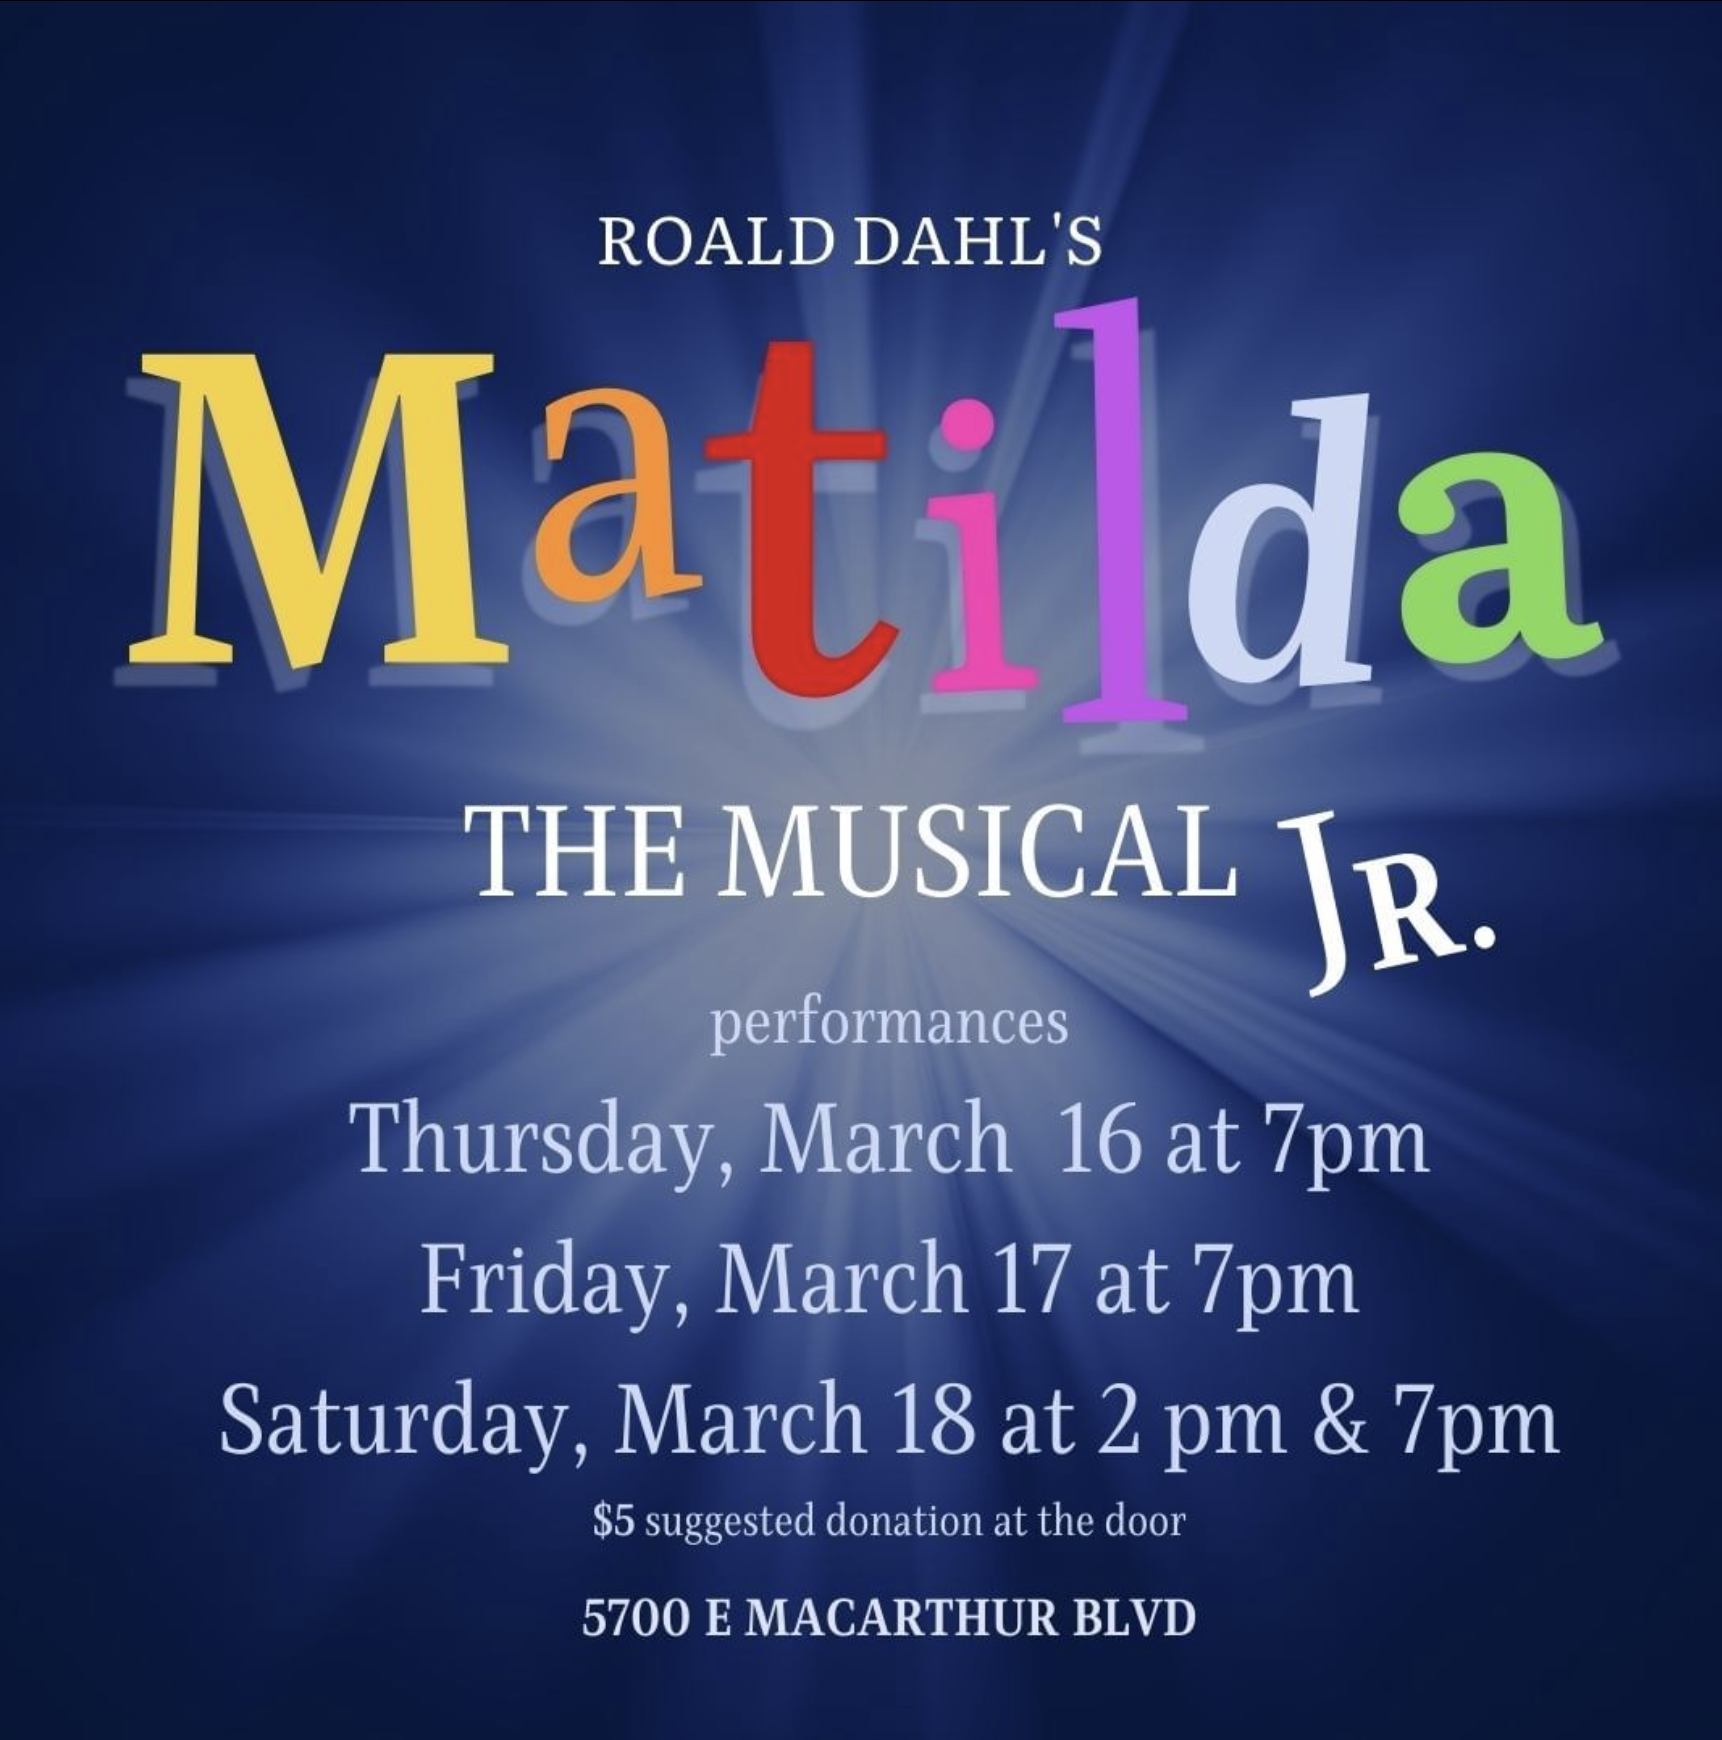 Roald Dahl's Matilda the musical at McLoughlin Middle School